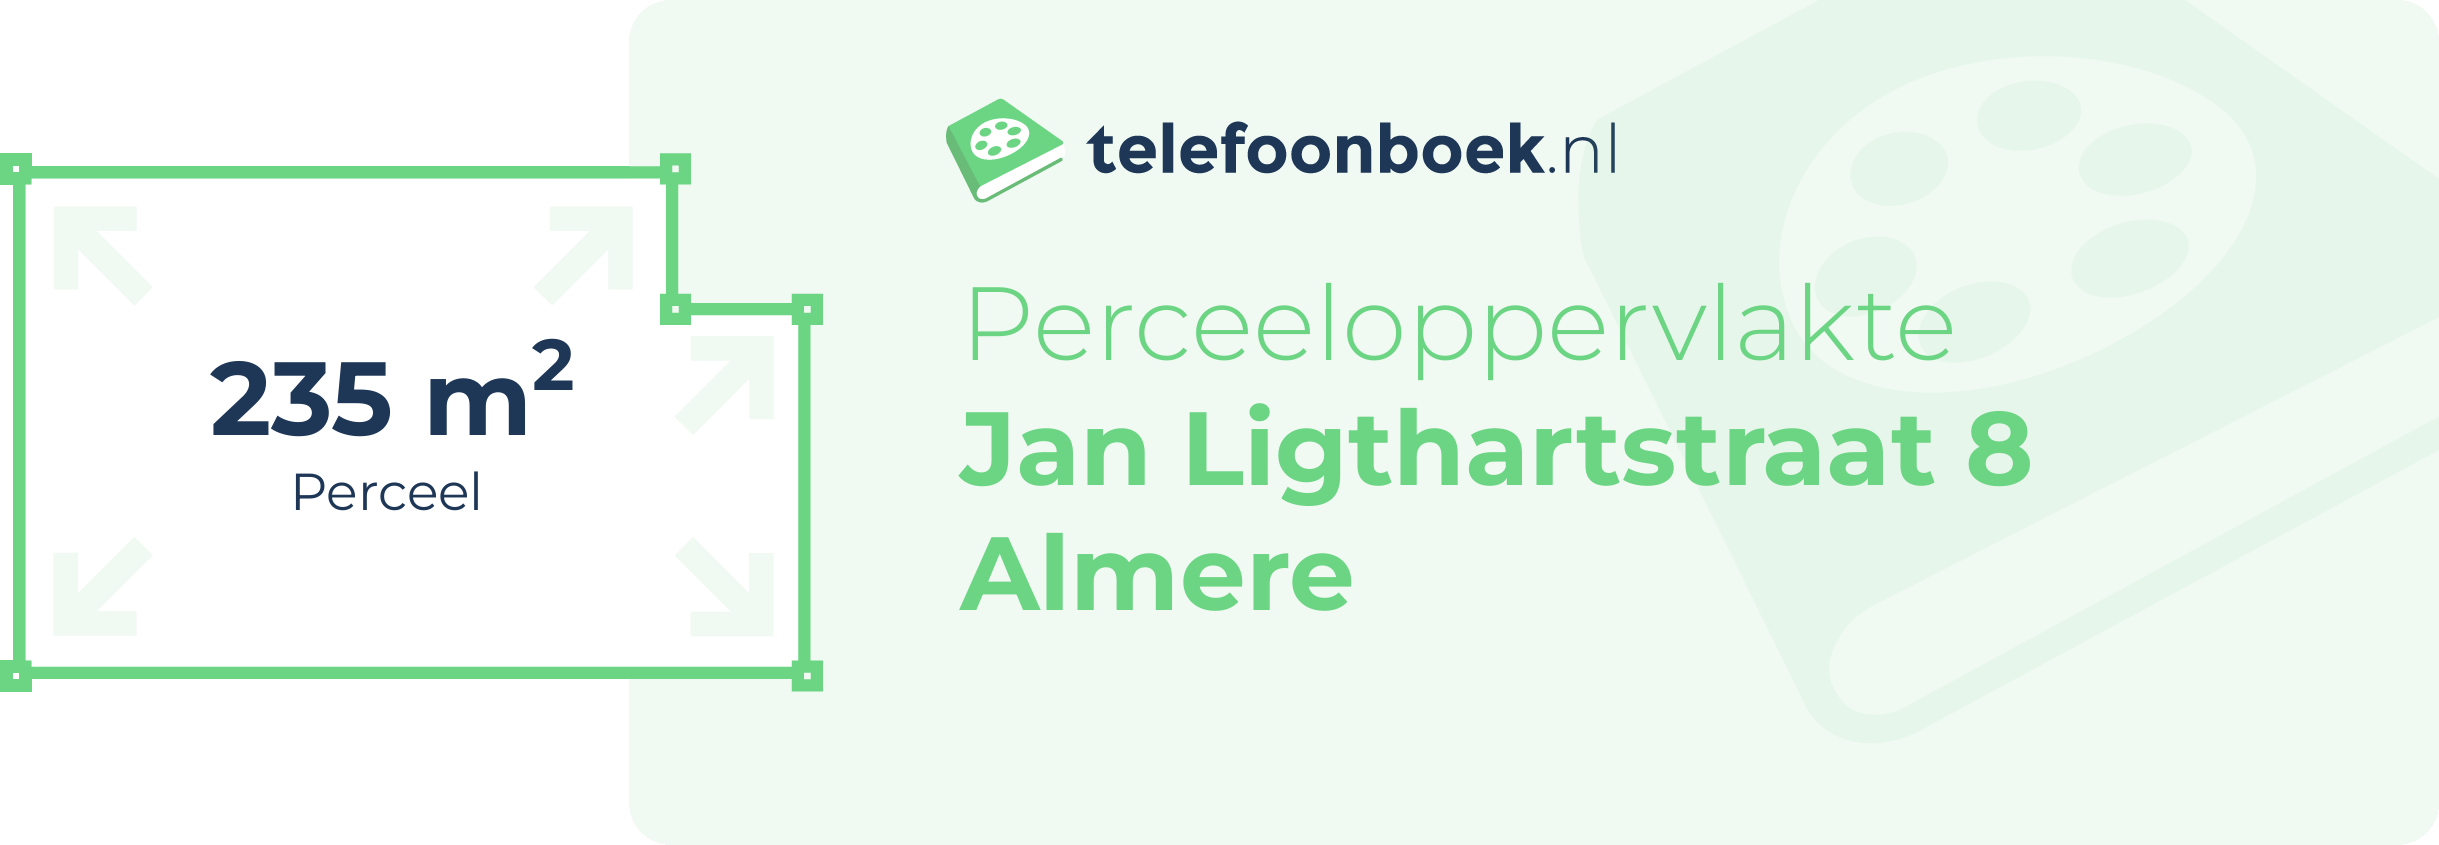 Perceeloppervlakte Jan Ligthartstraat 8 Almere